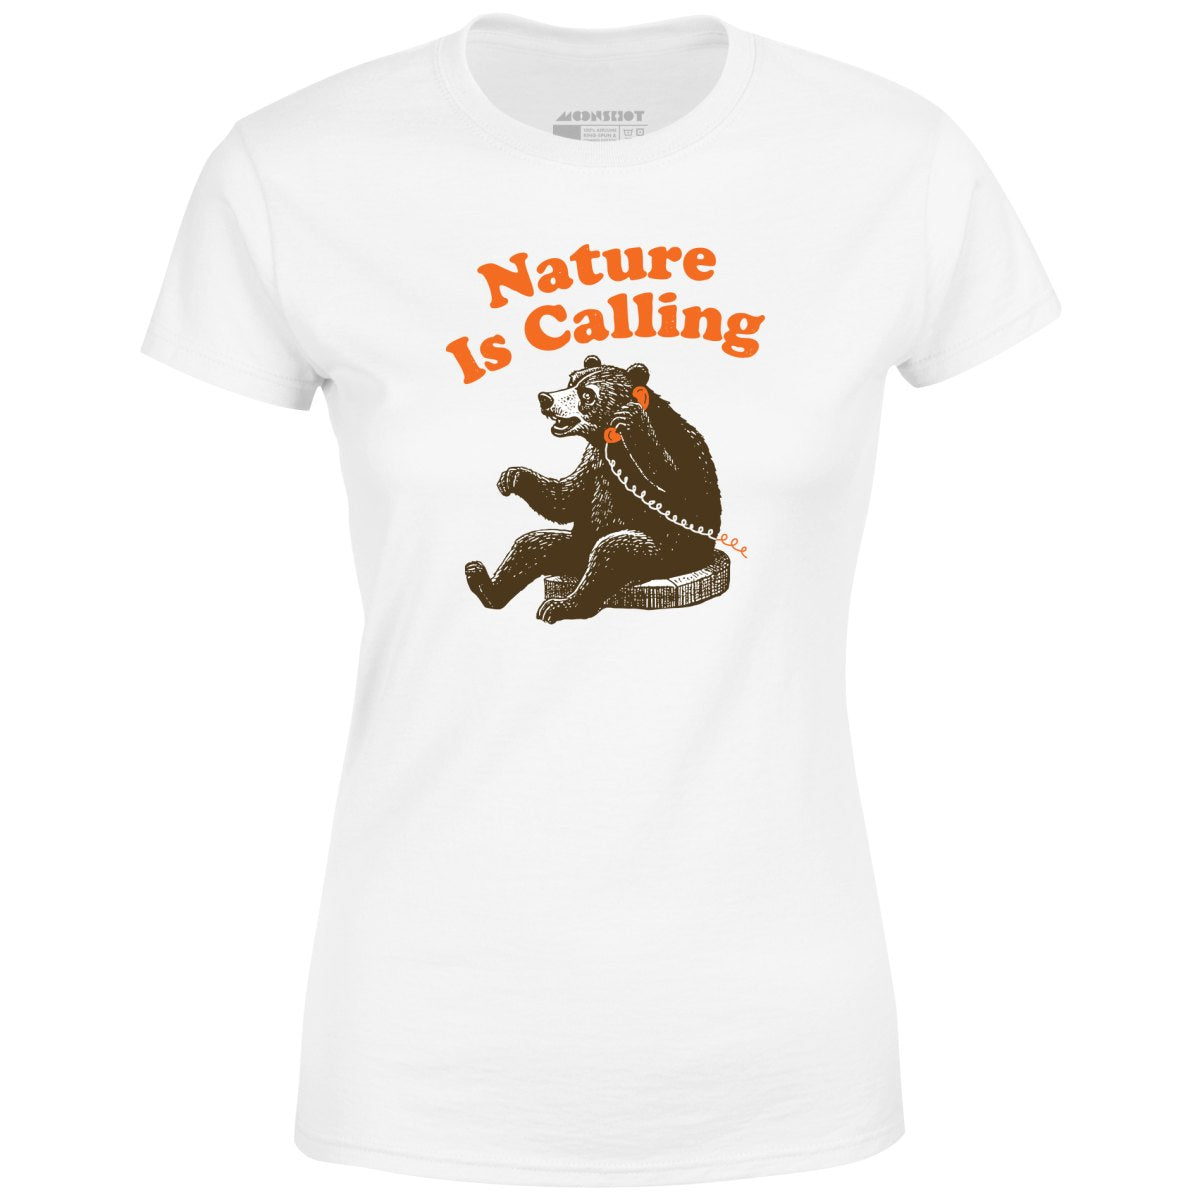 Nature is Calling - Women's T-Shirt